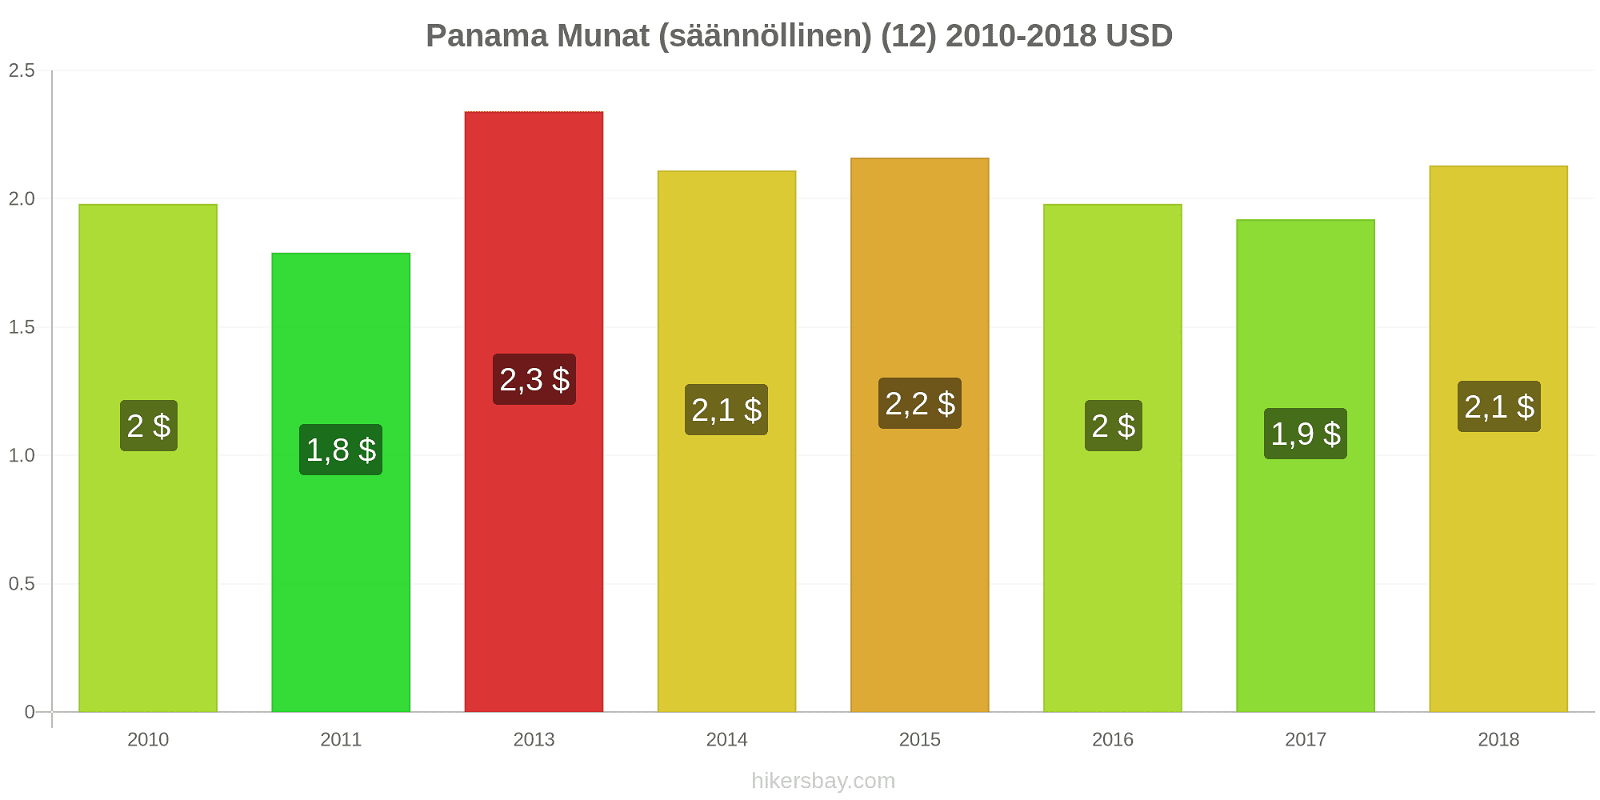 Panama hintojen muutokset Munat (tavalliset) (12) hikersbay.com